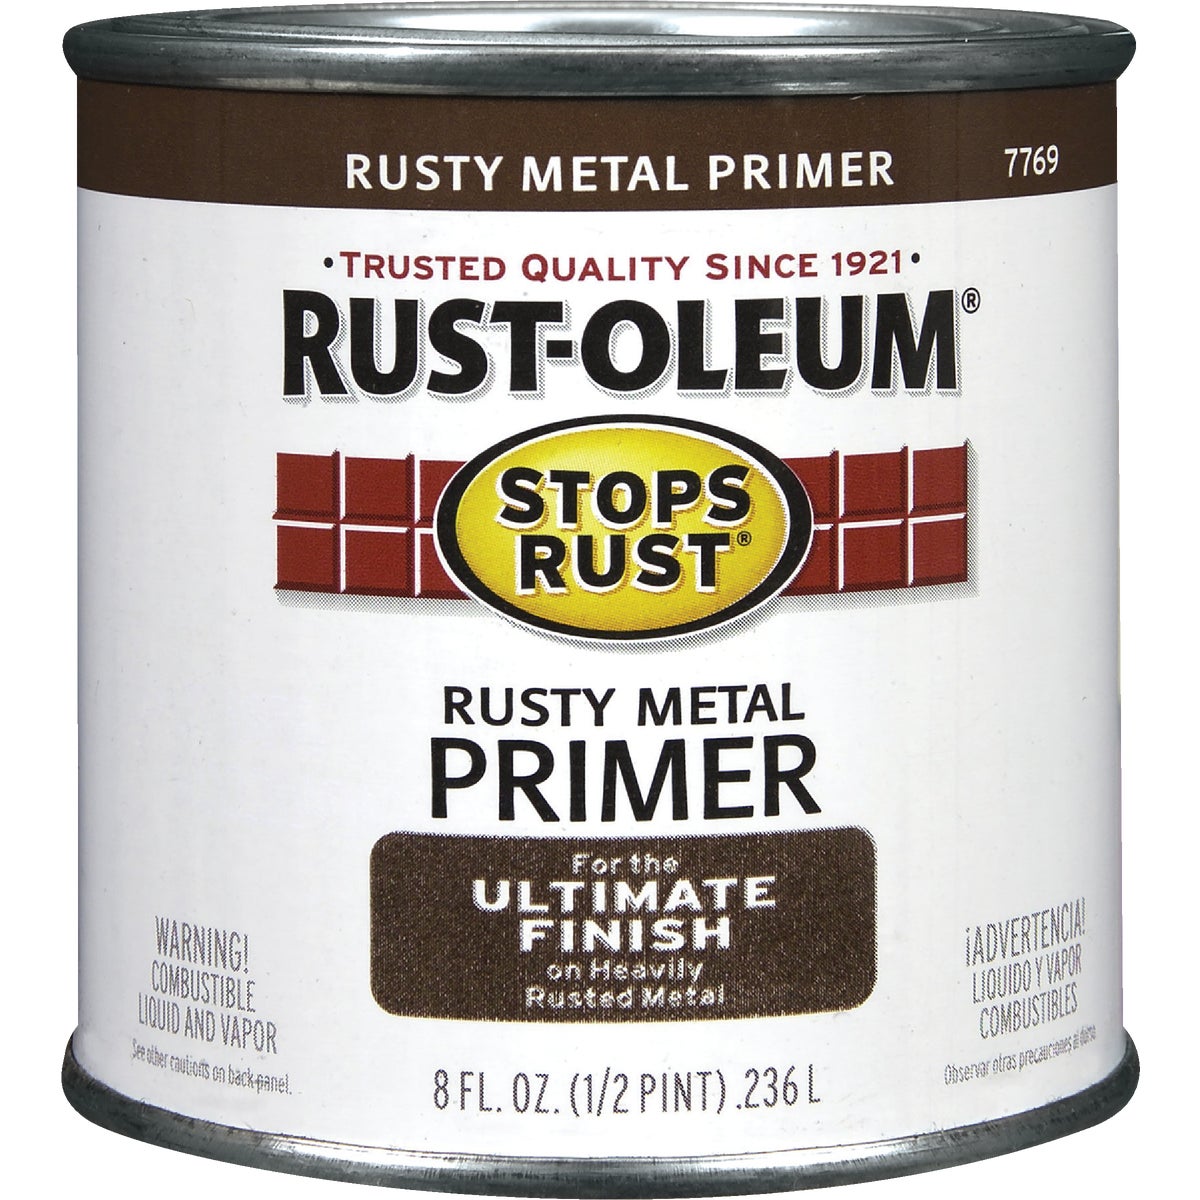 Rust-Oleum Stops Rust Rusty Metal Primer, Red/Brown, 1/2 Pt.